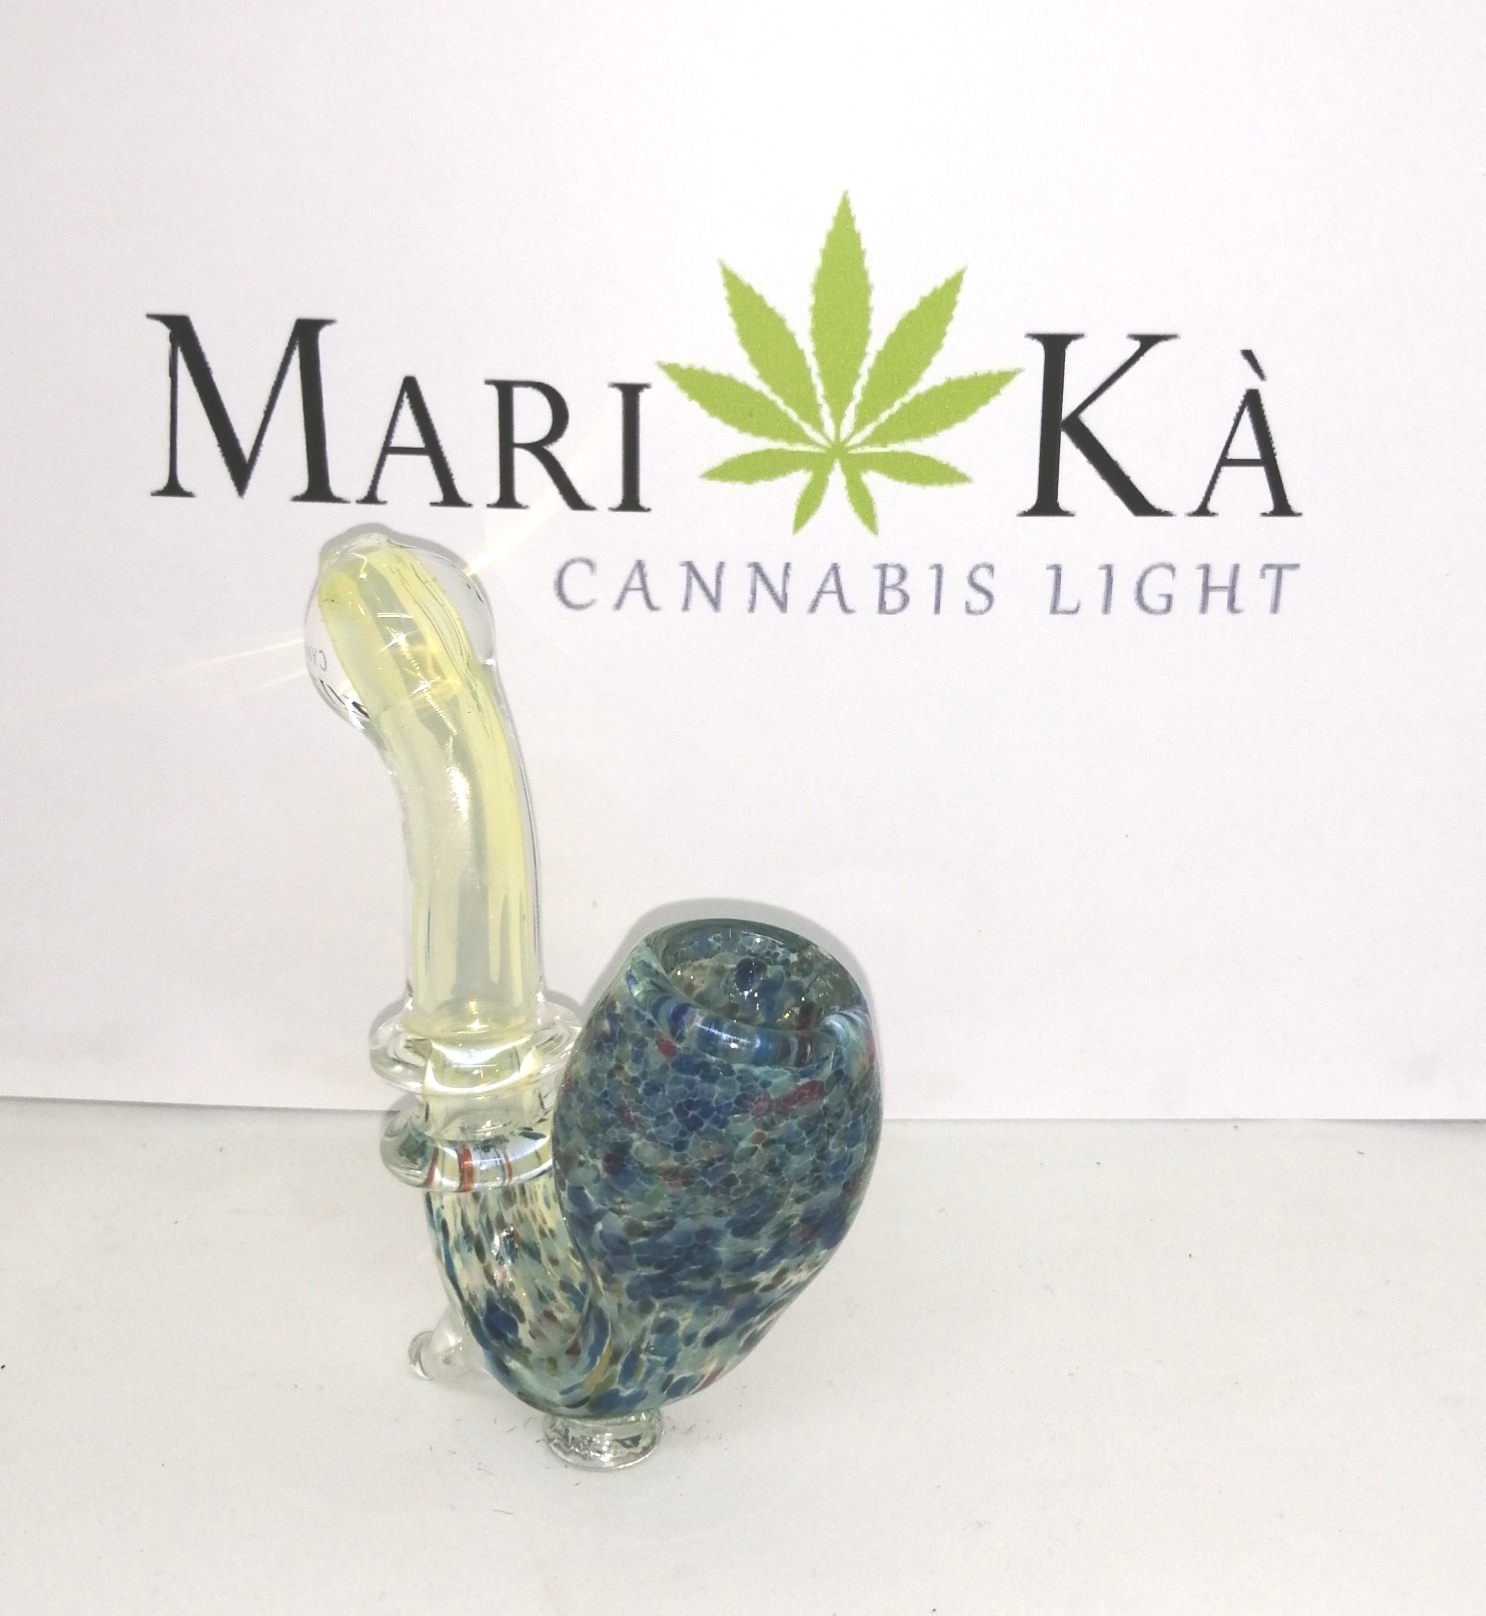 PIPA AD ACQUA O BUBBLER SHERLOCK, MARI-KA' - Marika Cannabis Light